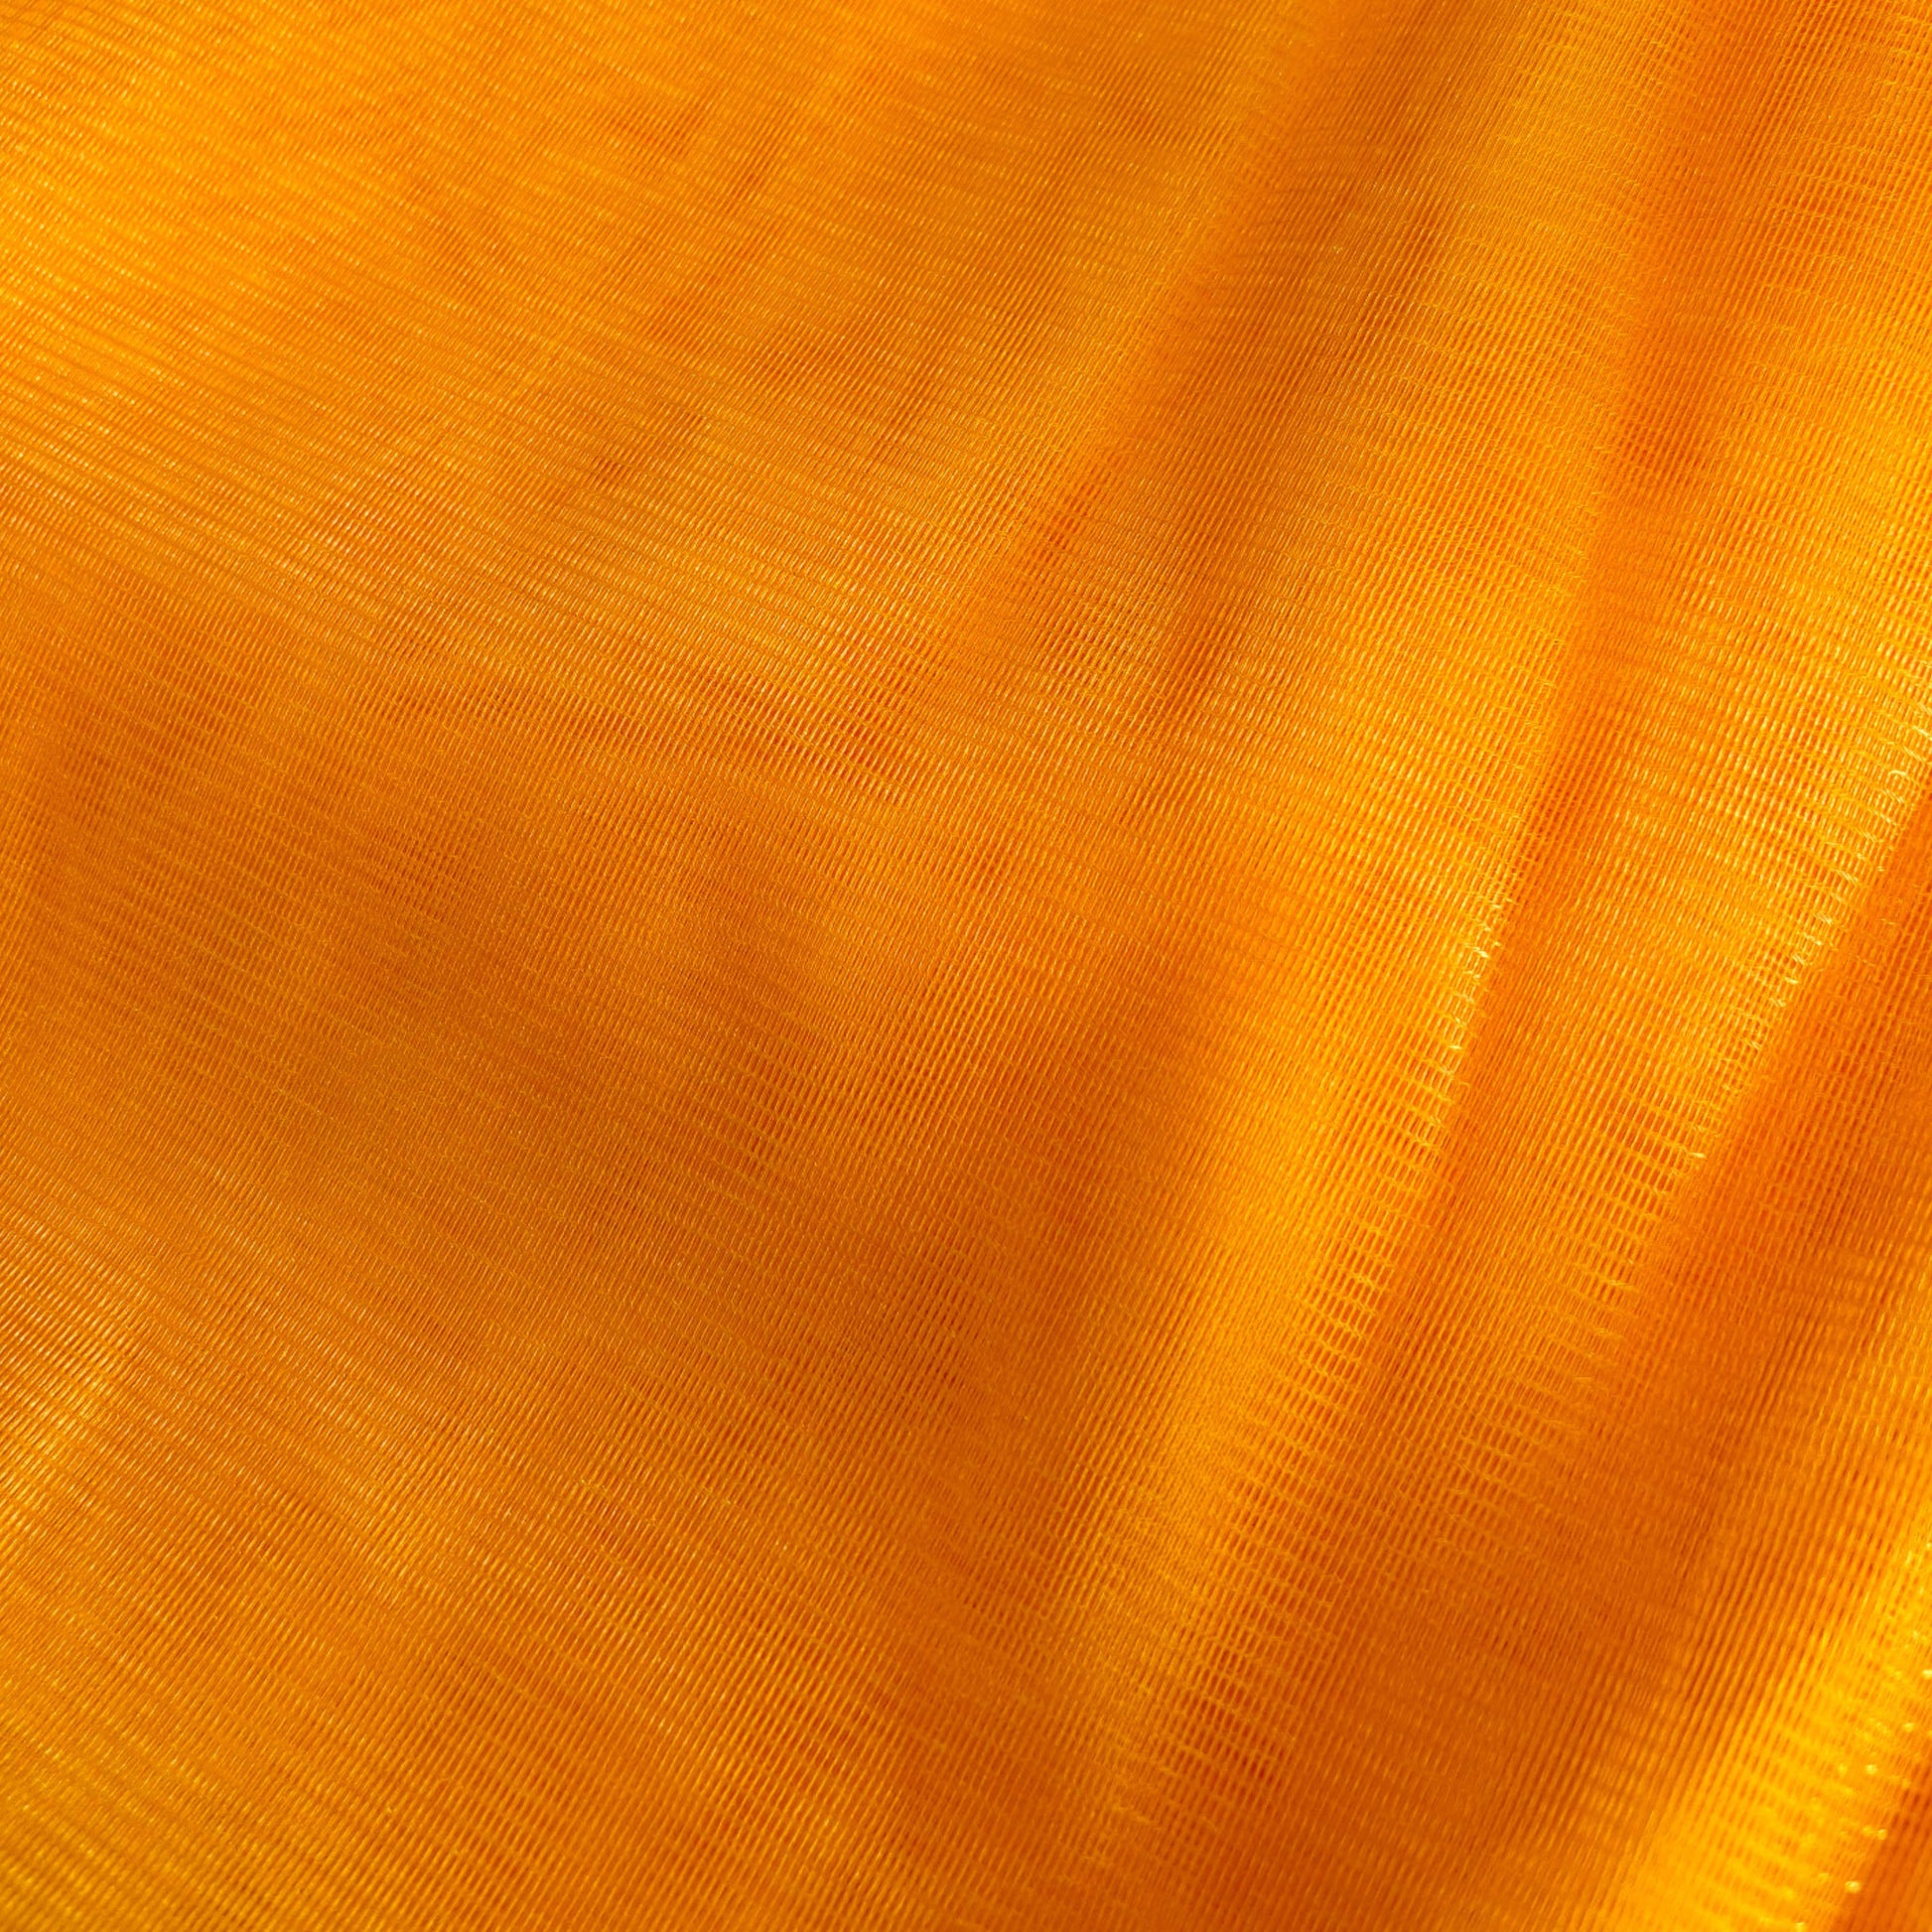 Vibrant Organza Fabric - 10mtr Bright Net in Multiple Colors for Decor & Crafts